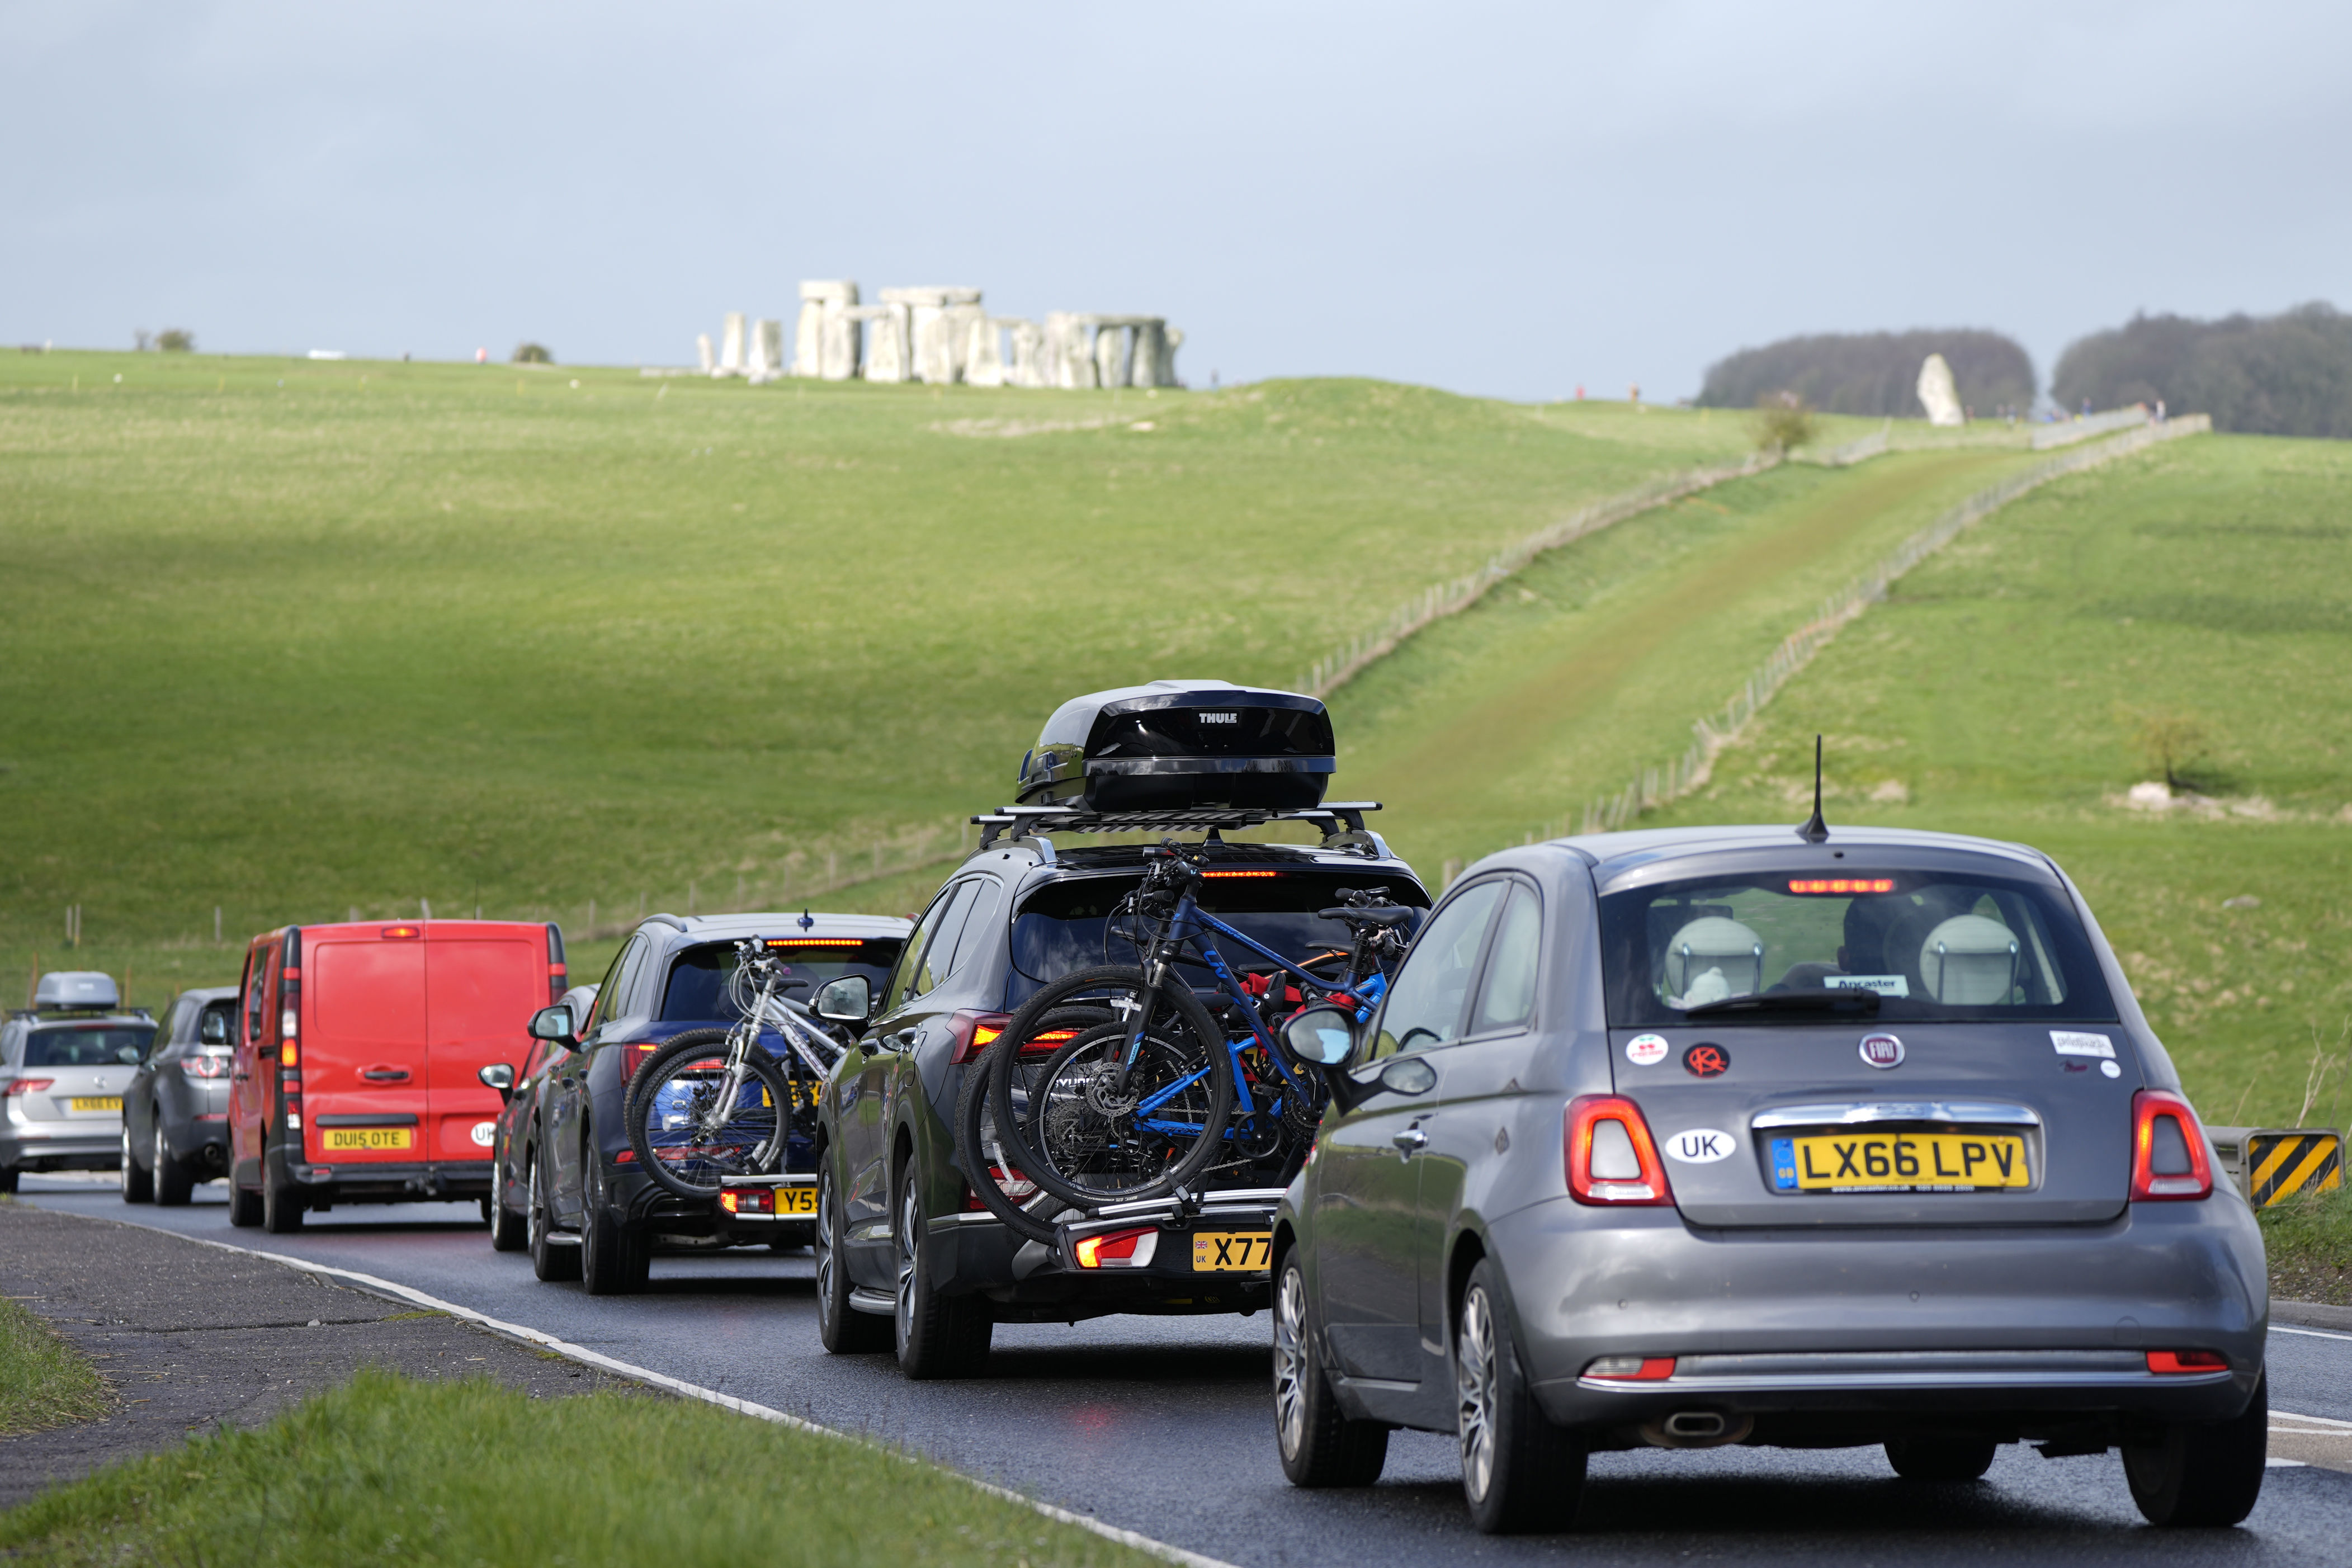 motorists stuck in ‘pretty horrendous’ 20-mile long good friday motorway queues